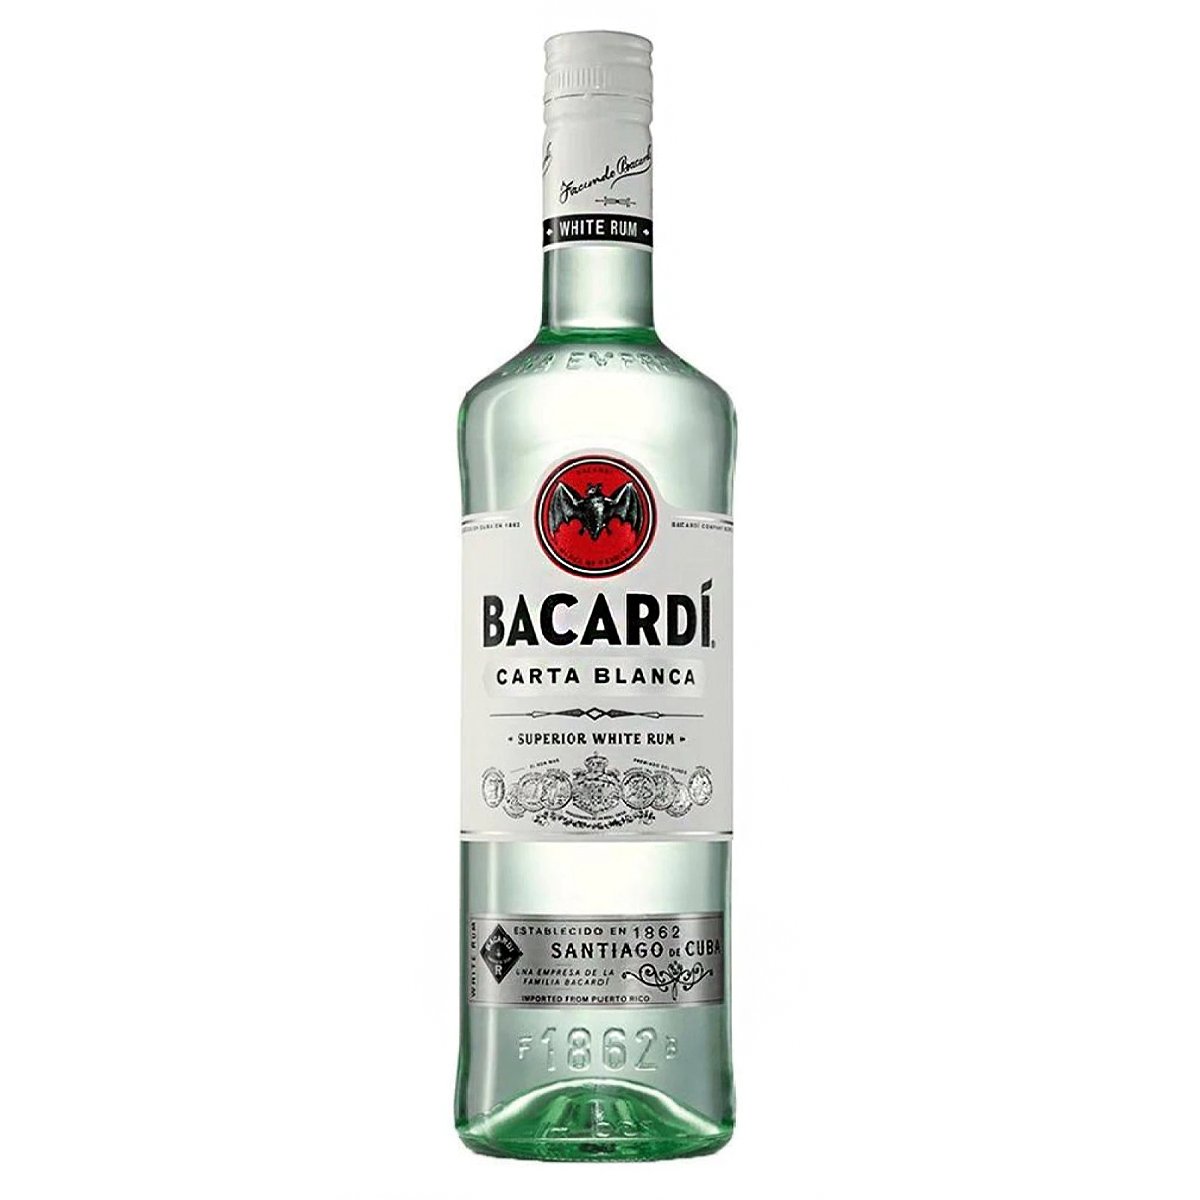 Ron Bacardi blanco - Carta Blanca 980 ml 